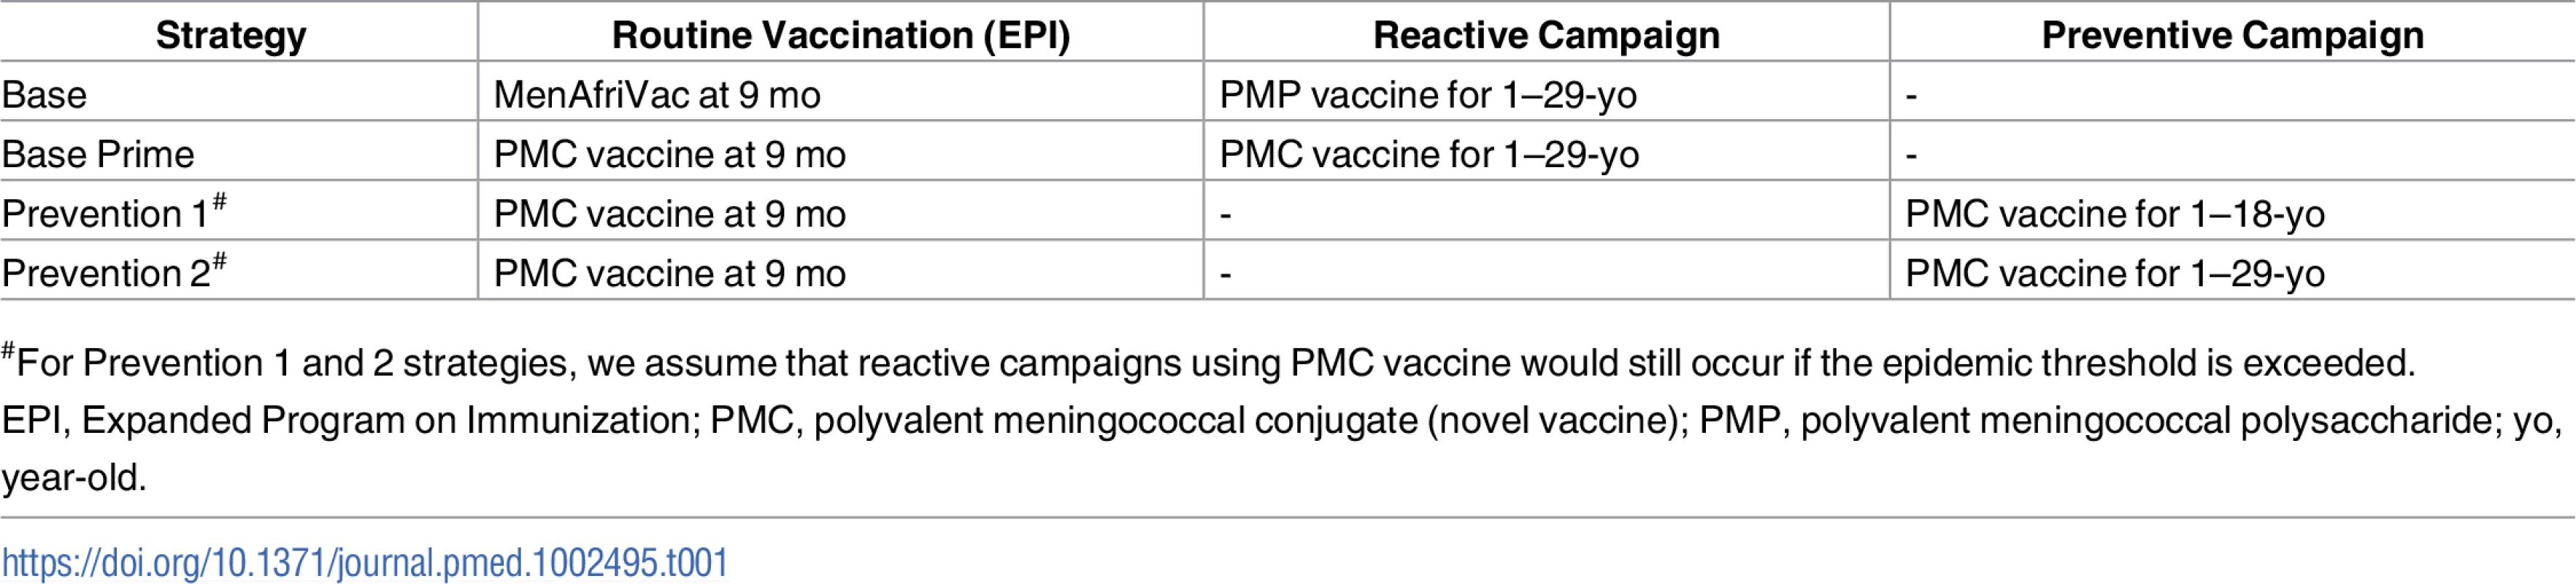 Alternative vaccine strategies for employing polyvalent meningococcal vaccines (post 2020).